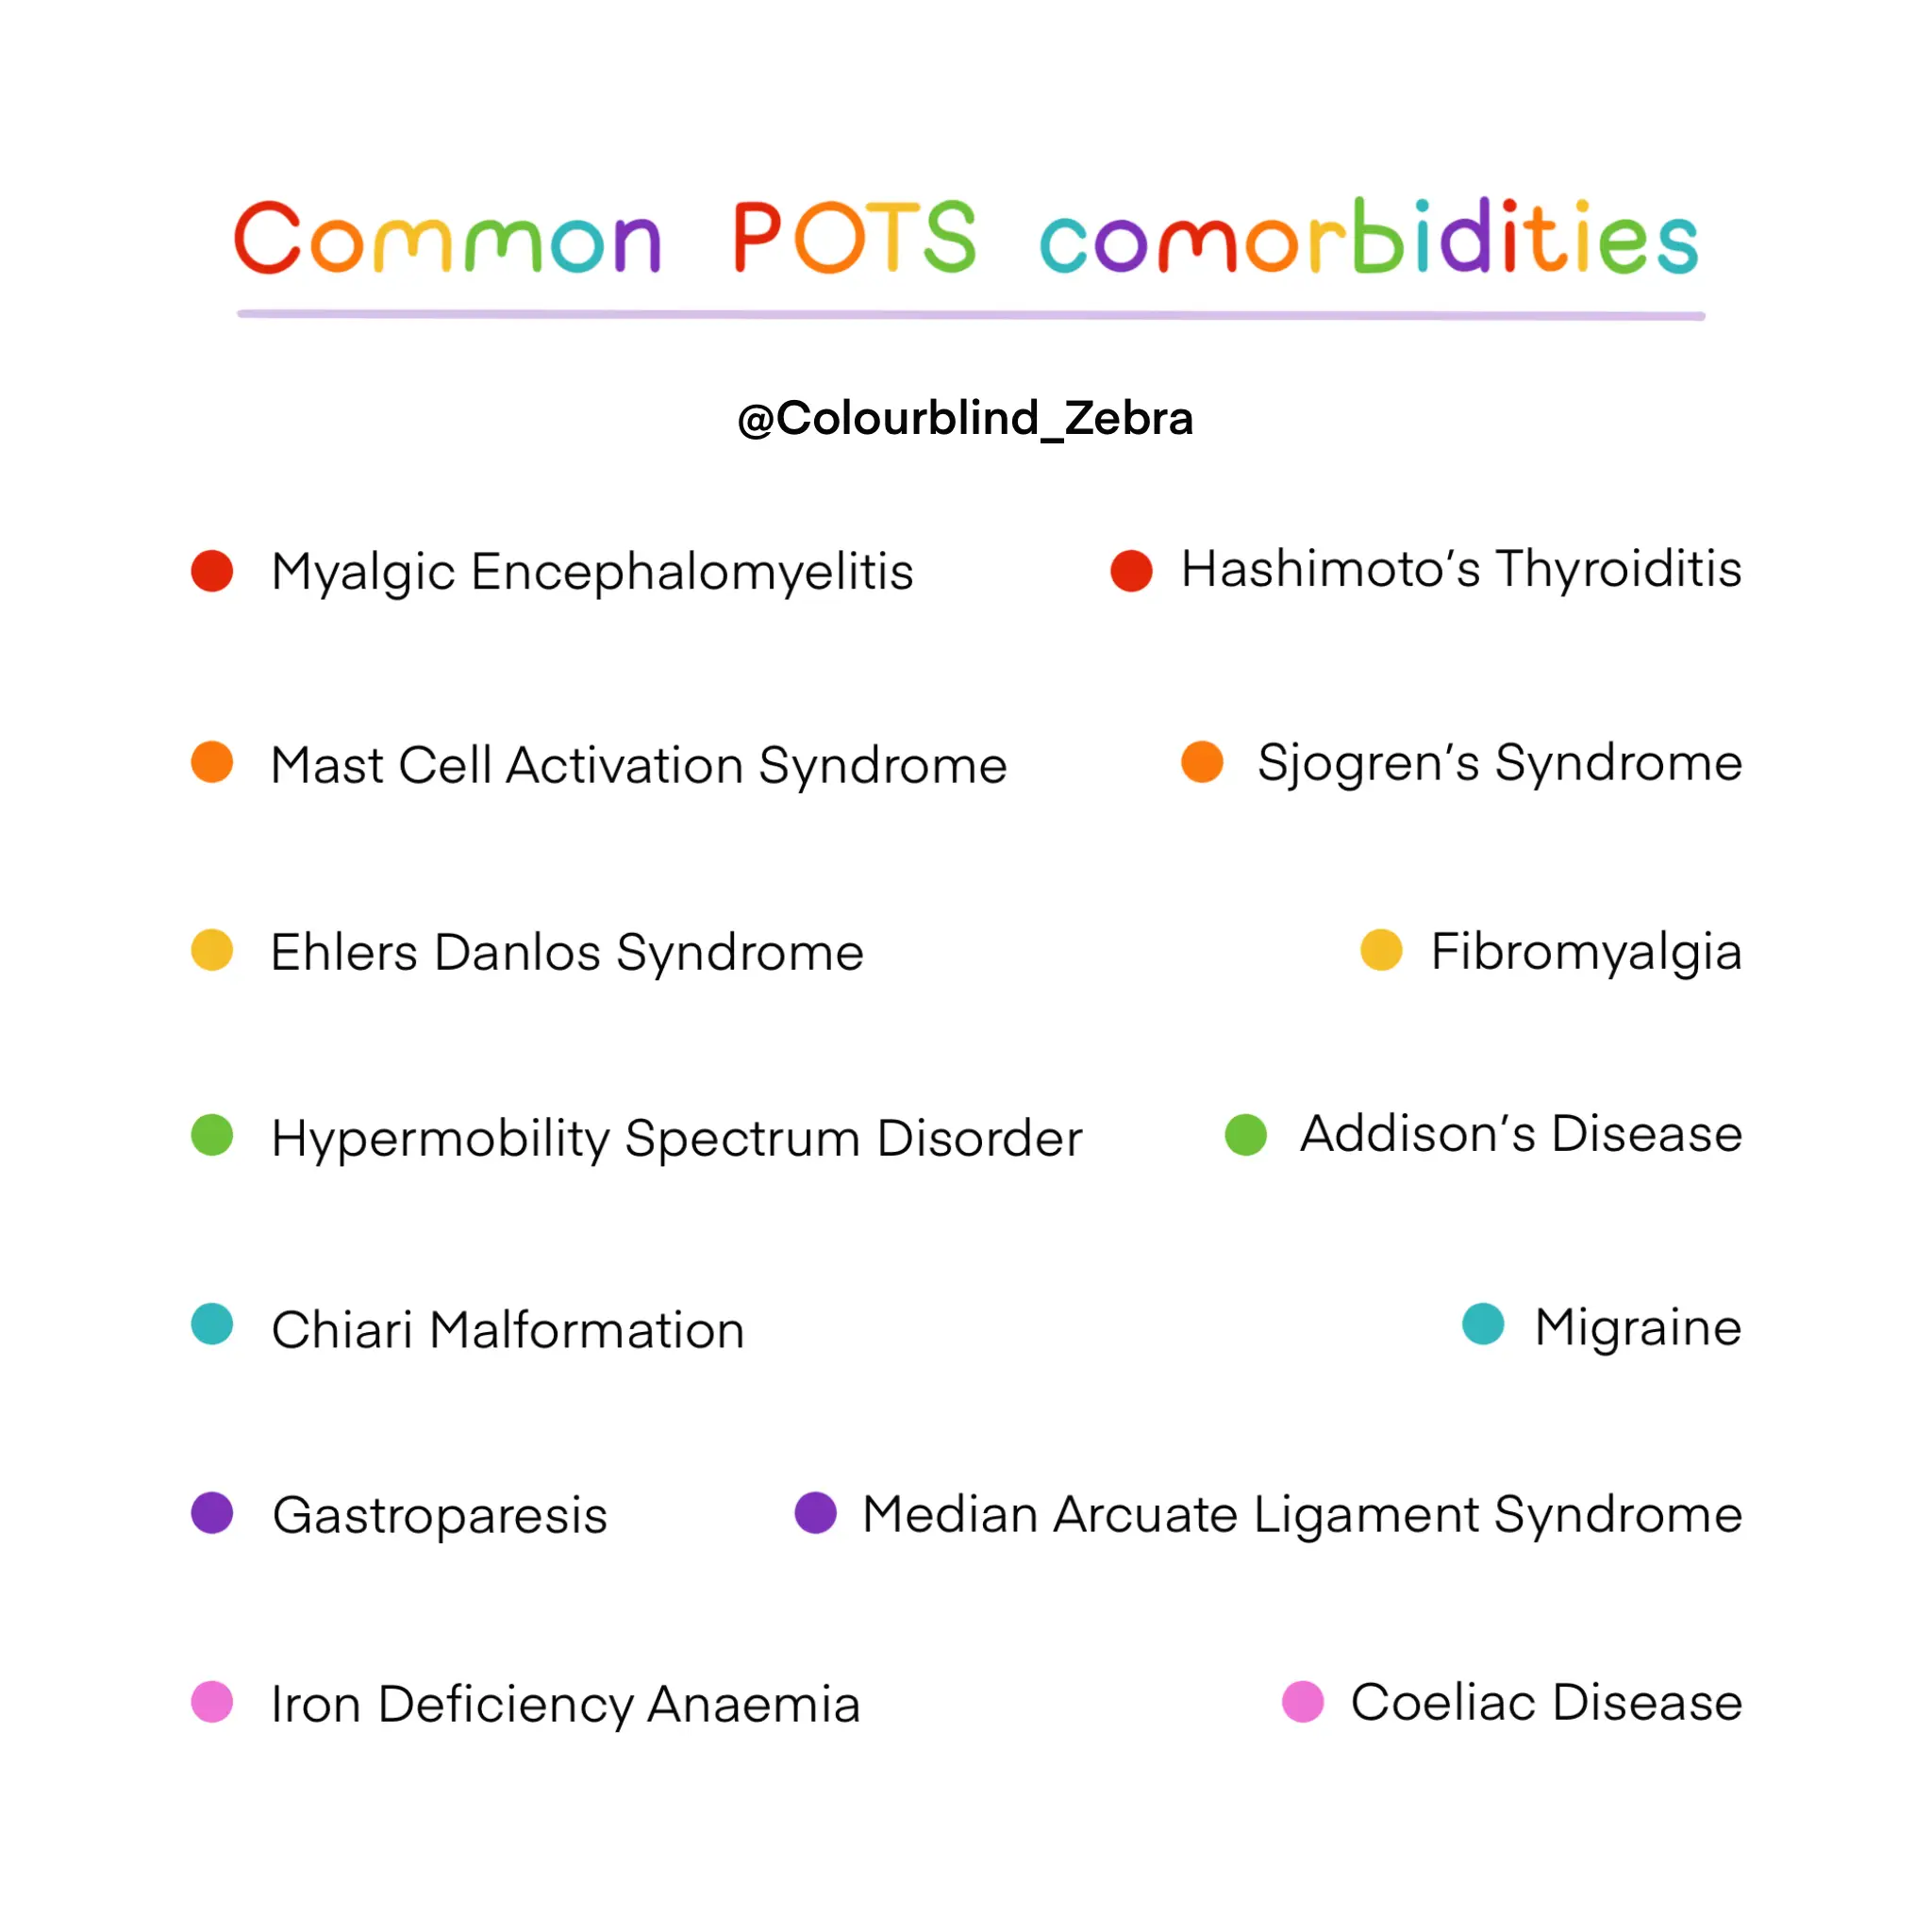 Colourblind_Zebra - What is Postural Orthostatic Tachycardia